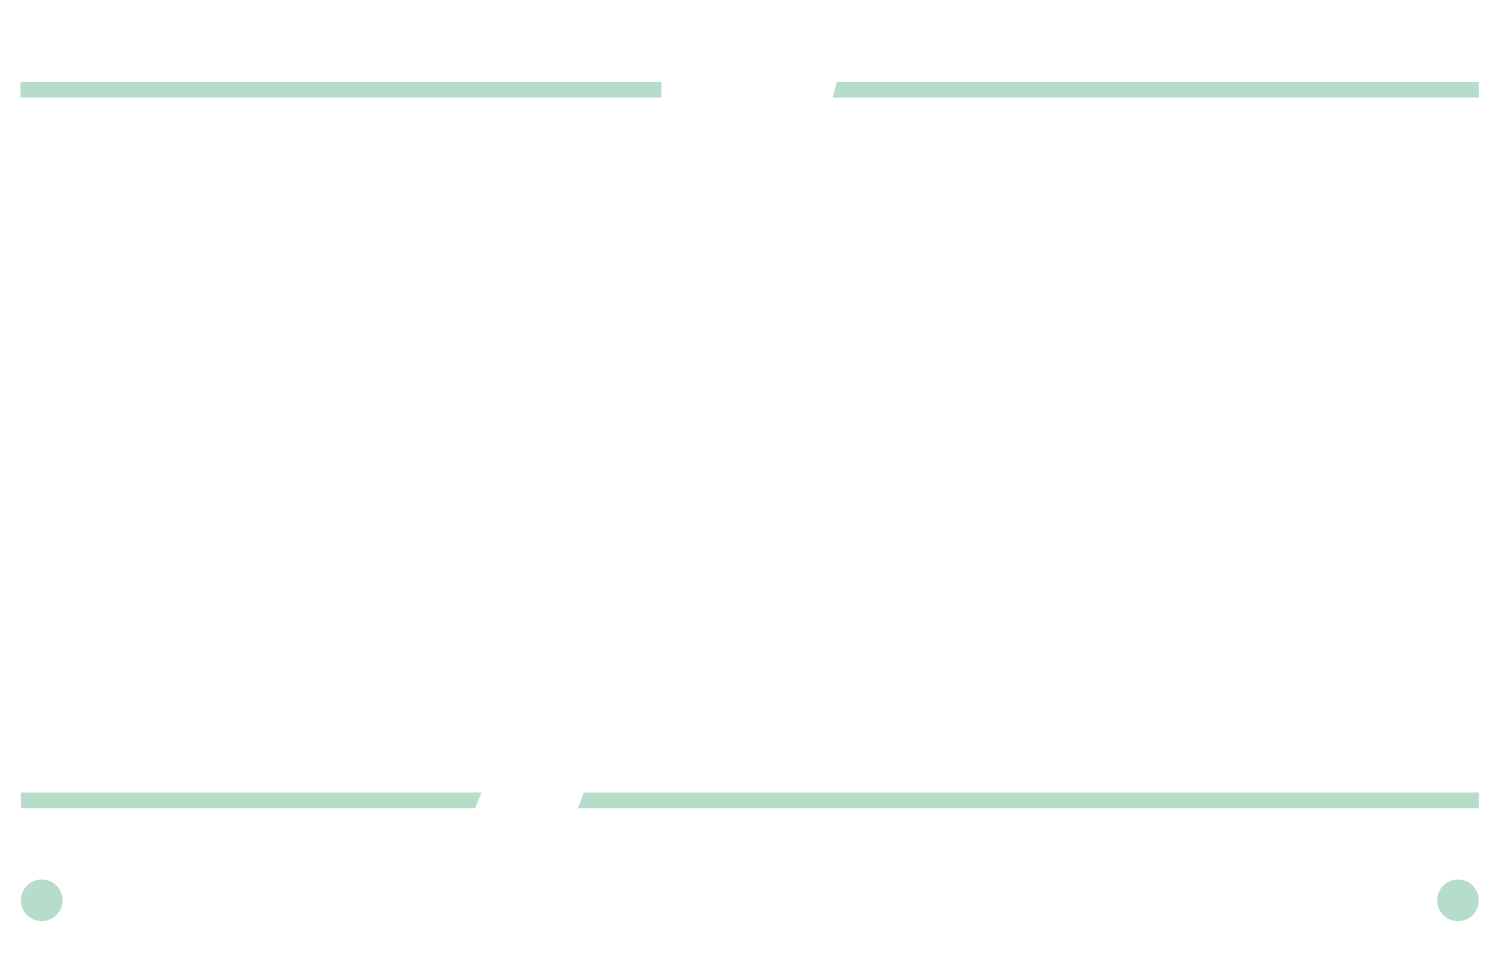 Jocelyn Rhynard for Ohio Senate